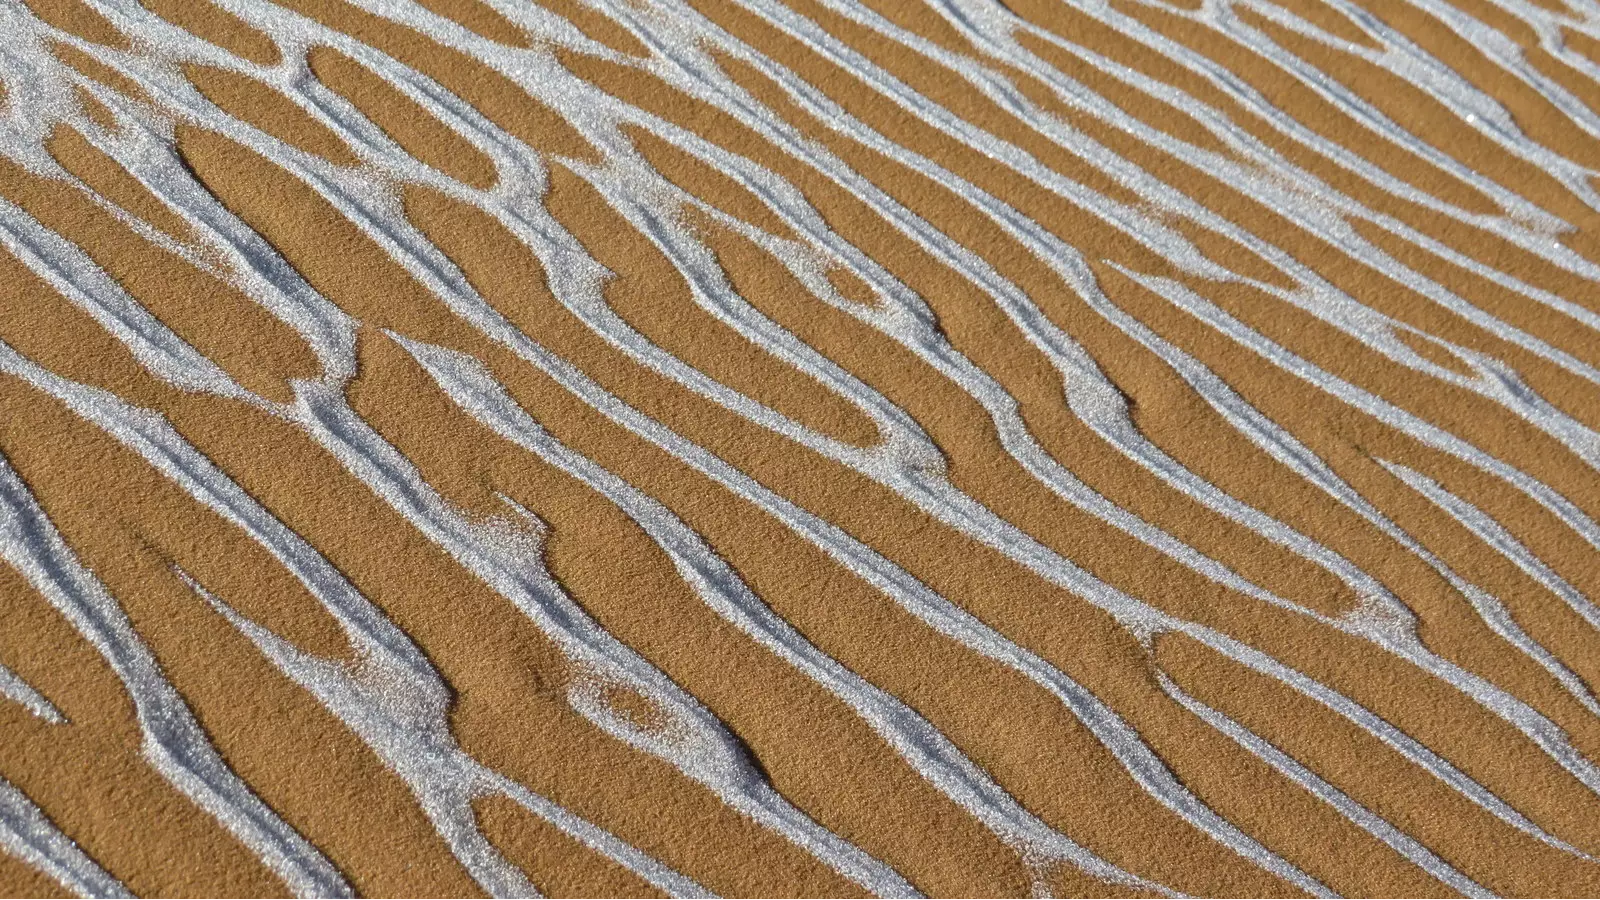 Amazing Photos Show Snow On The Dunes Of The Sahara Desert